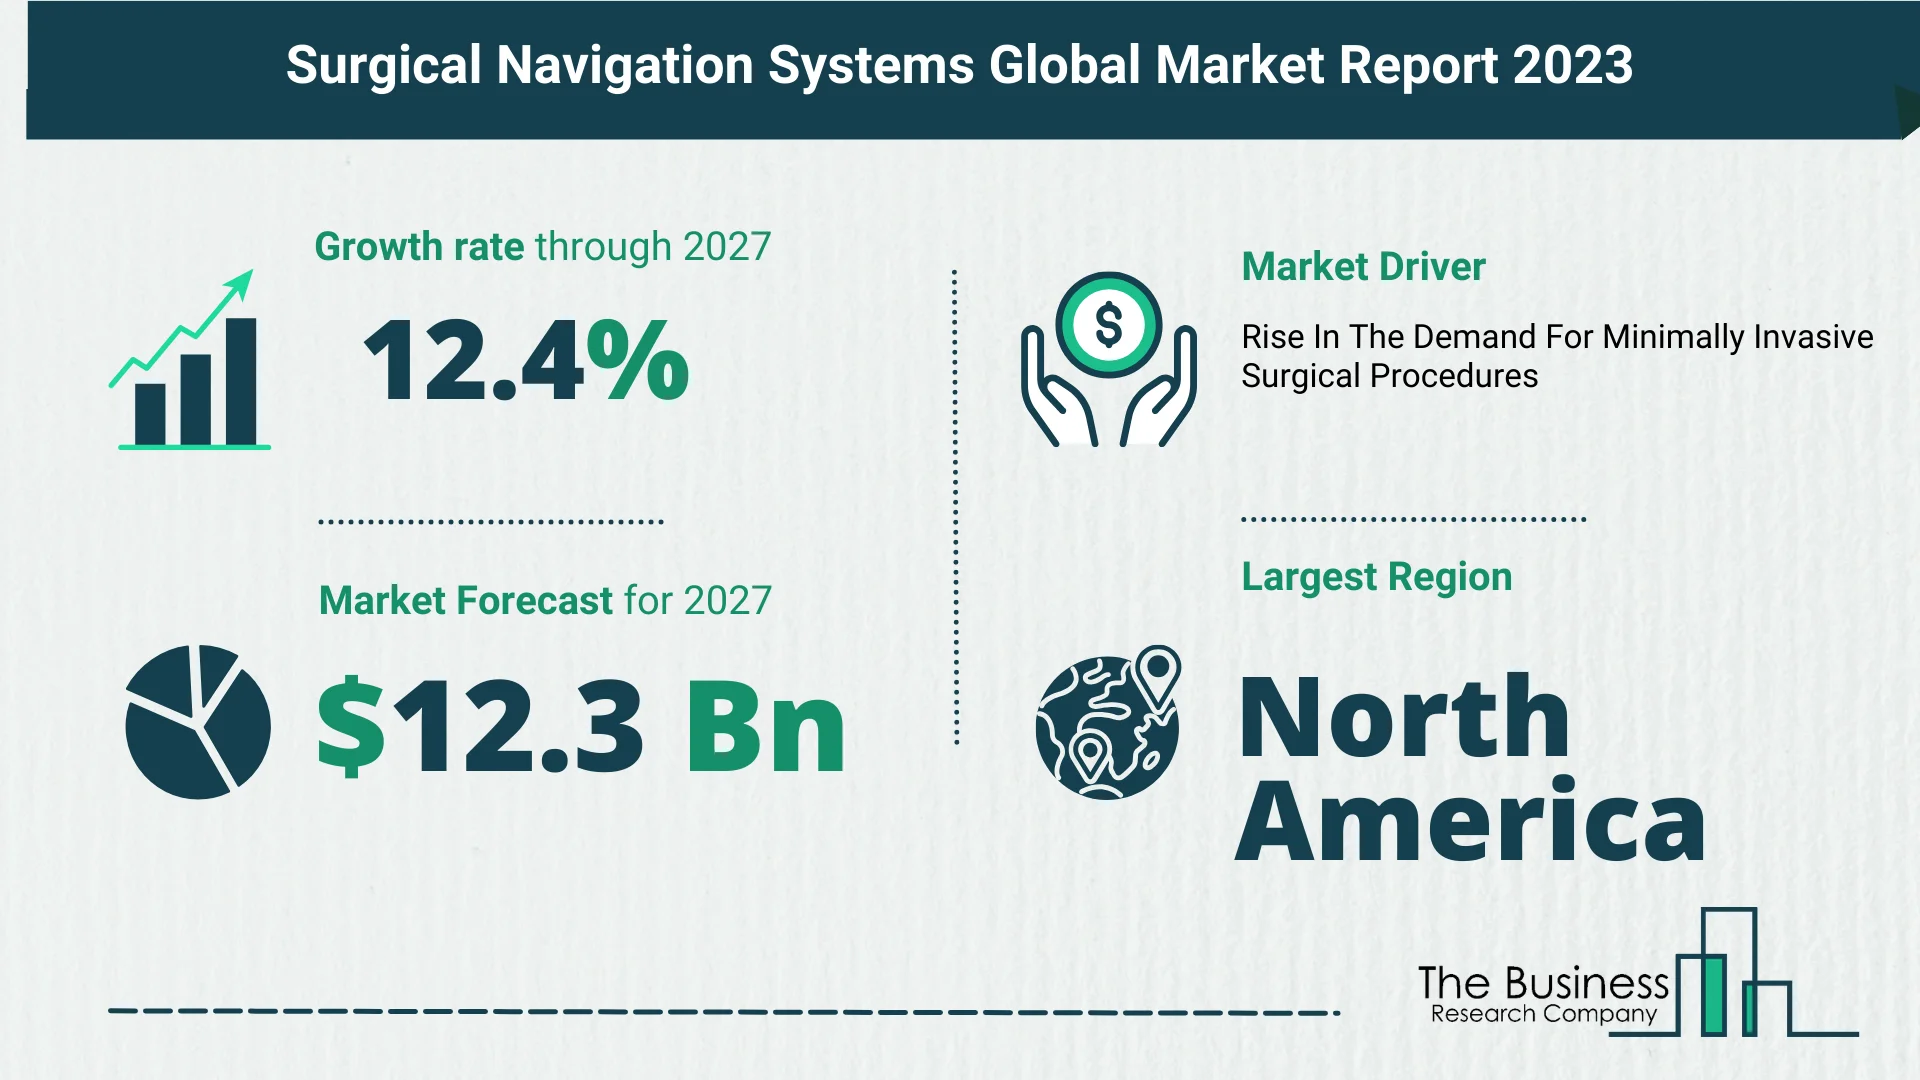 Global Surgical Navigation Systems Market